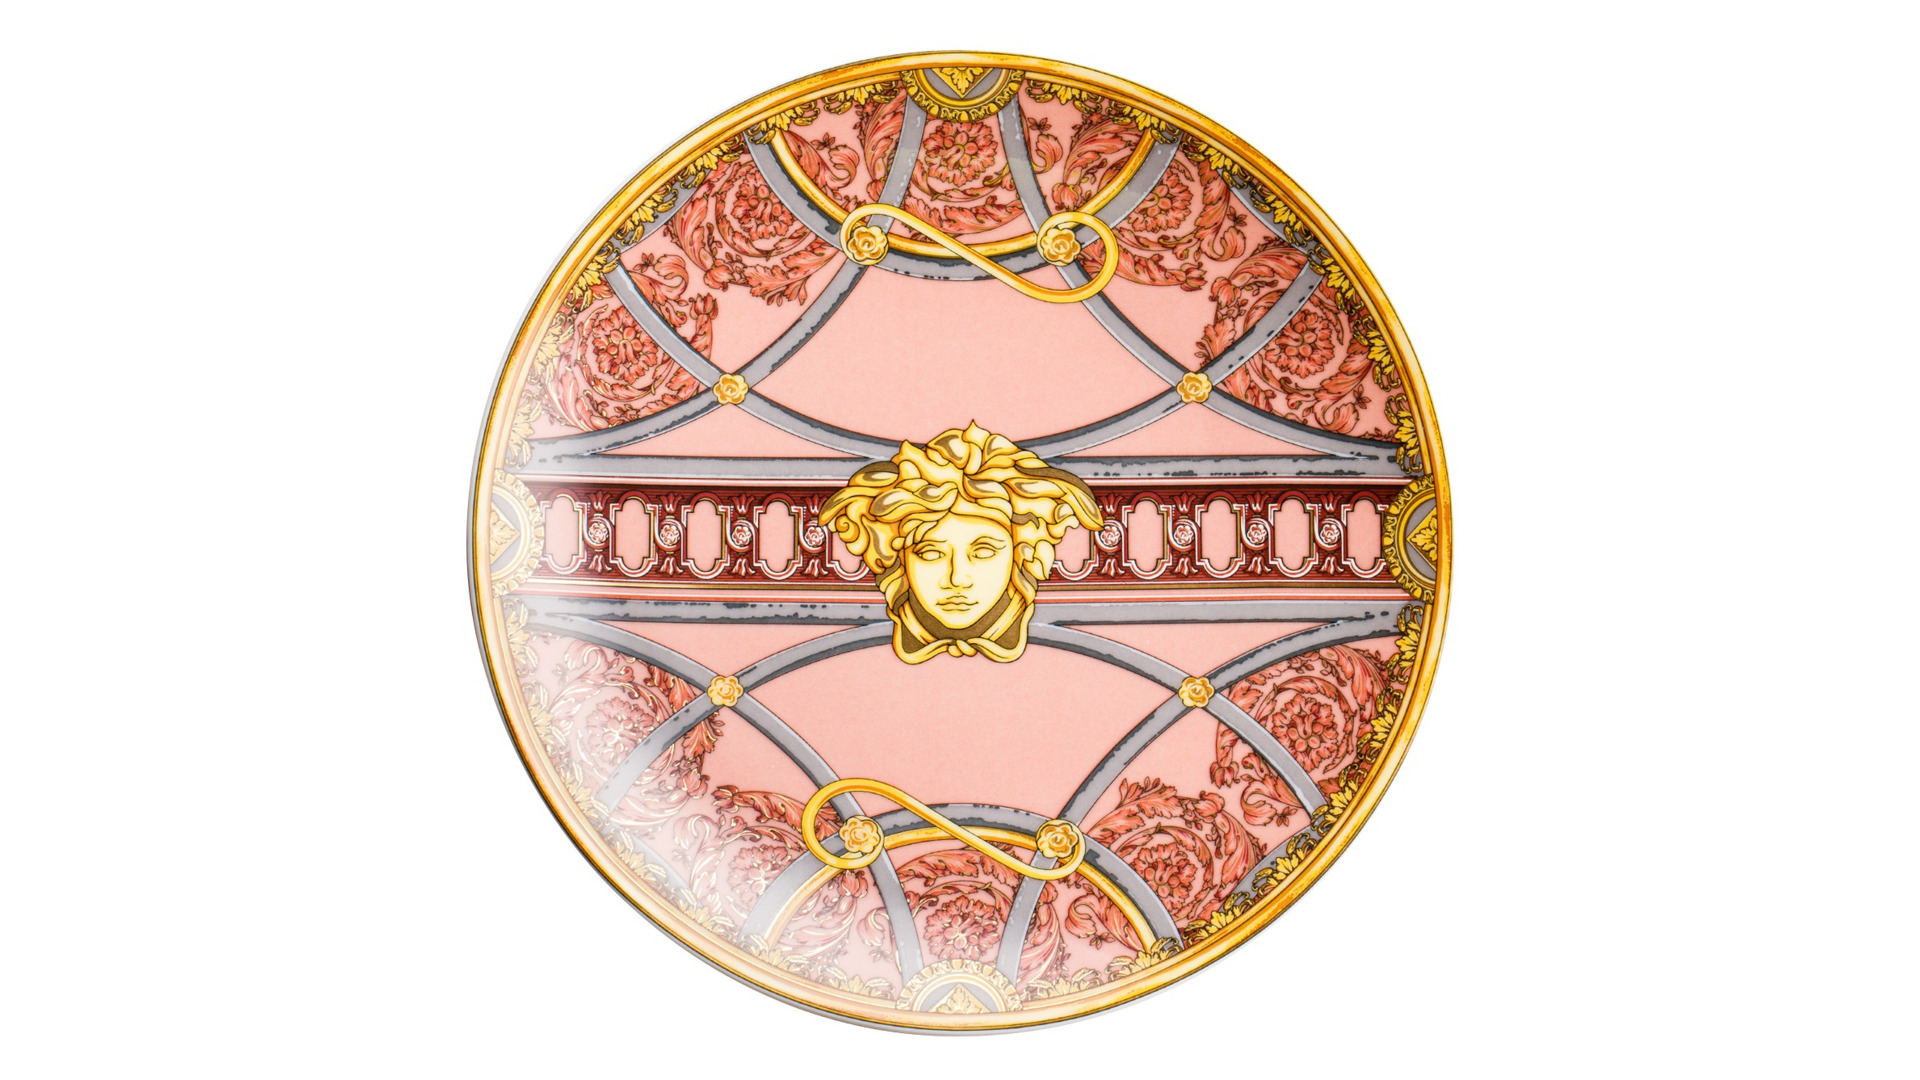 Тарелка пирожковая Rosenthal Versace Ла Скала 17 см, фарфор, розовая